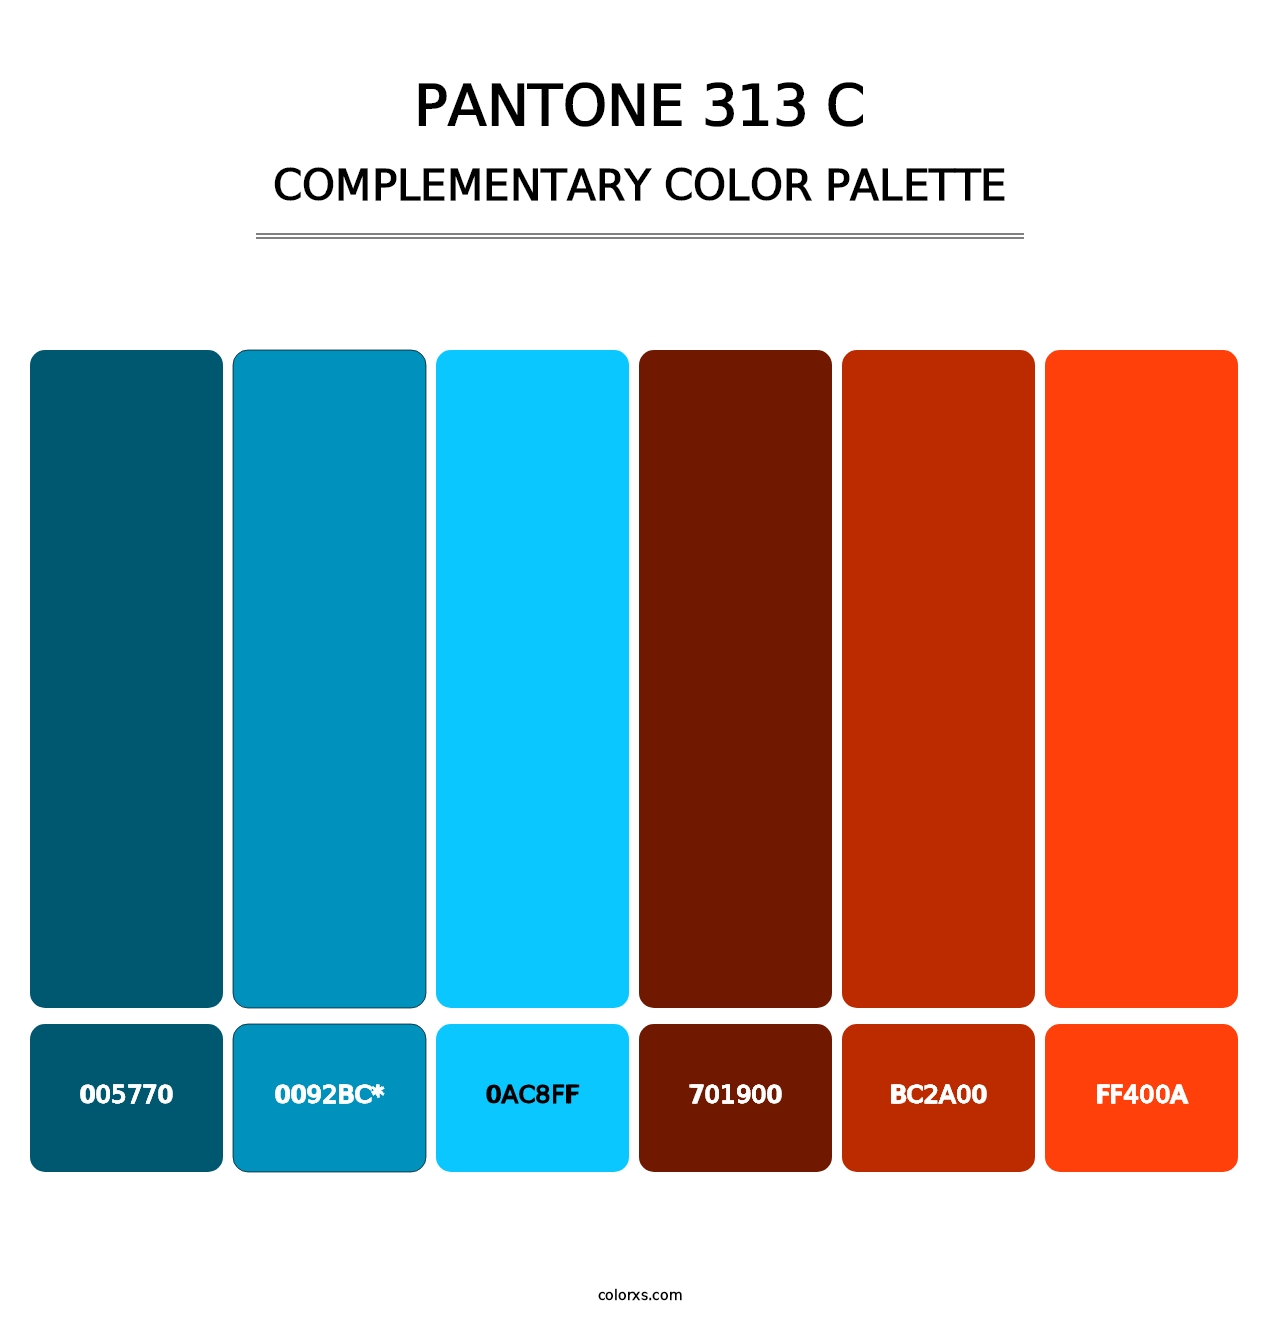 PANTONE 313 C - Complementary Color Palette